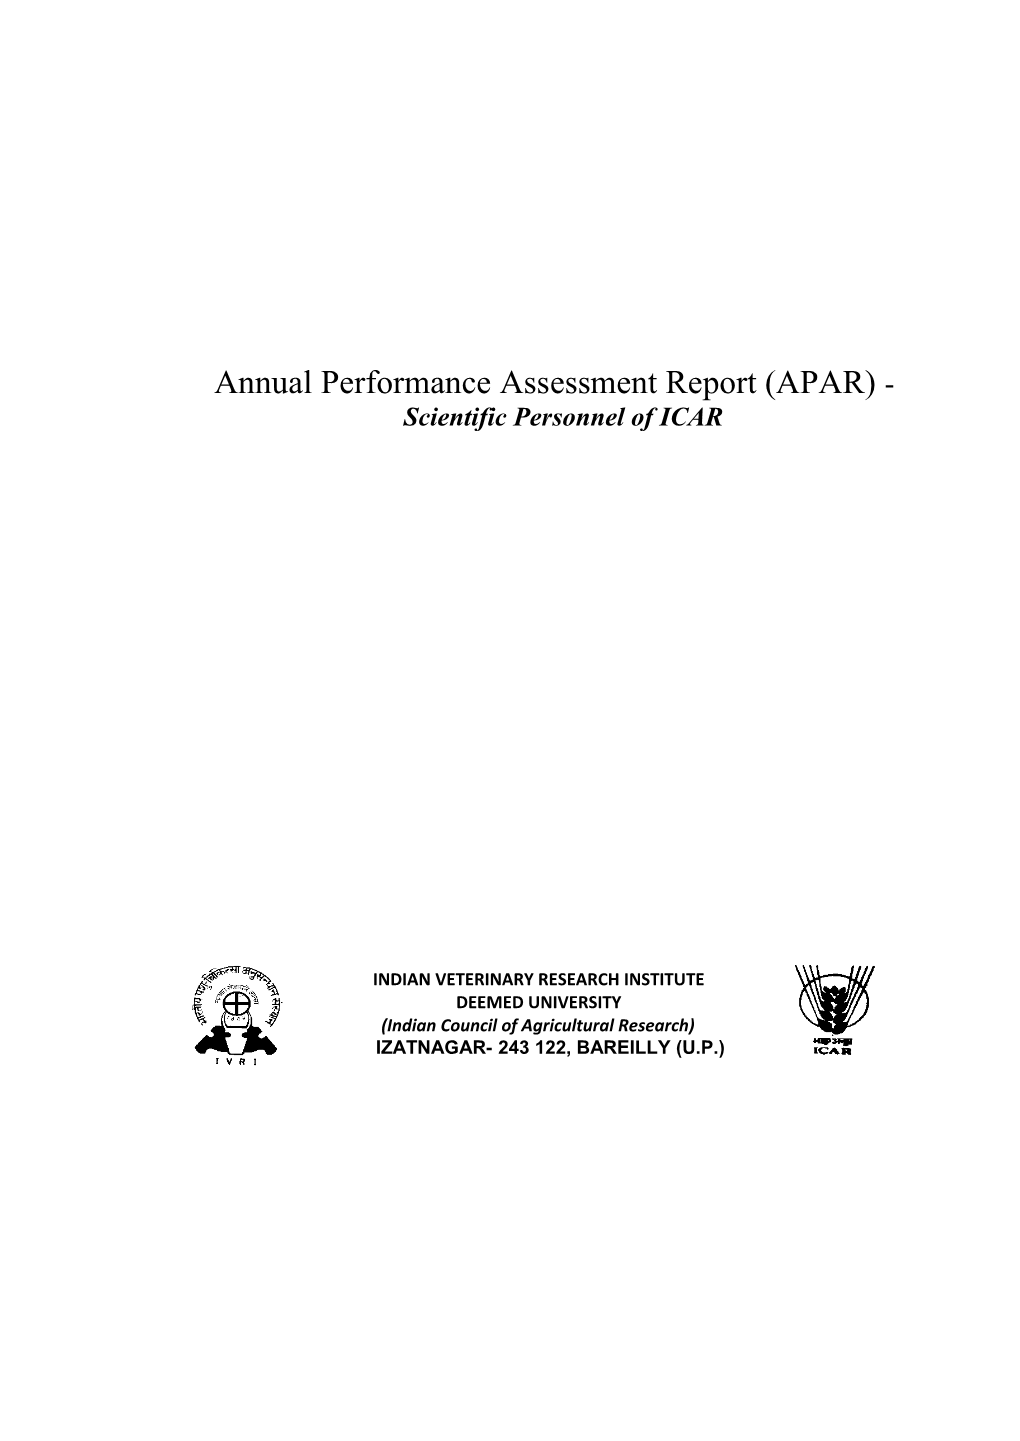 Annual Performanceassessmentreport (APAR) System Forscientific Personnel of ICAR